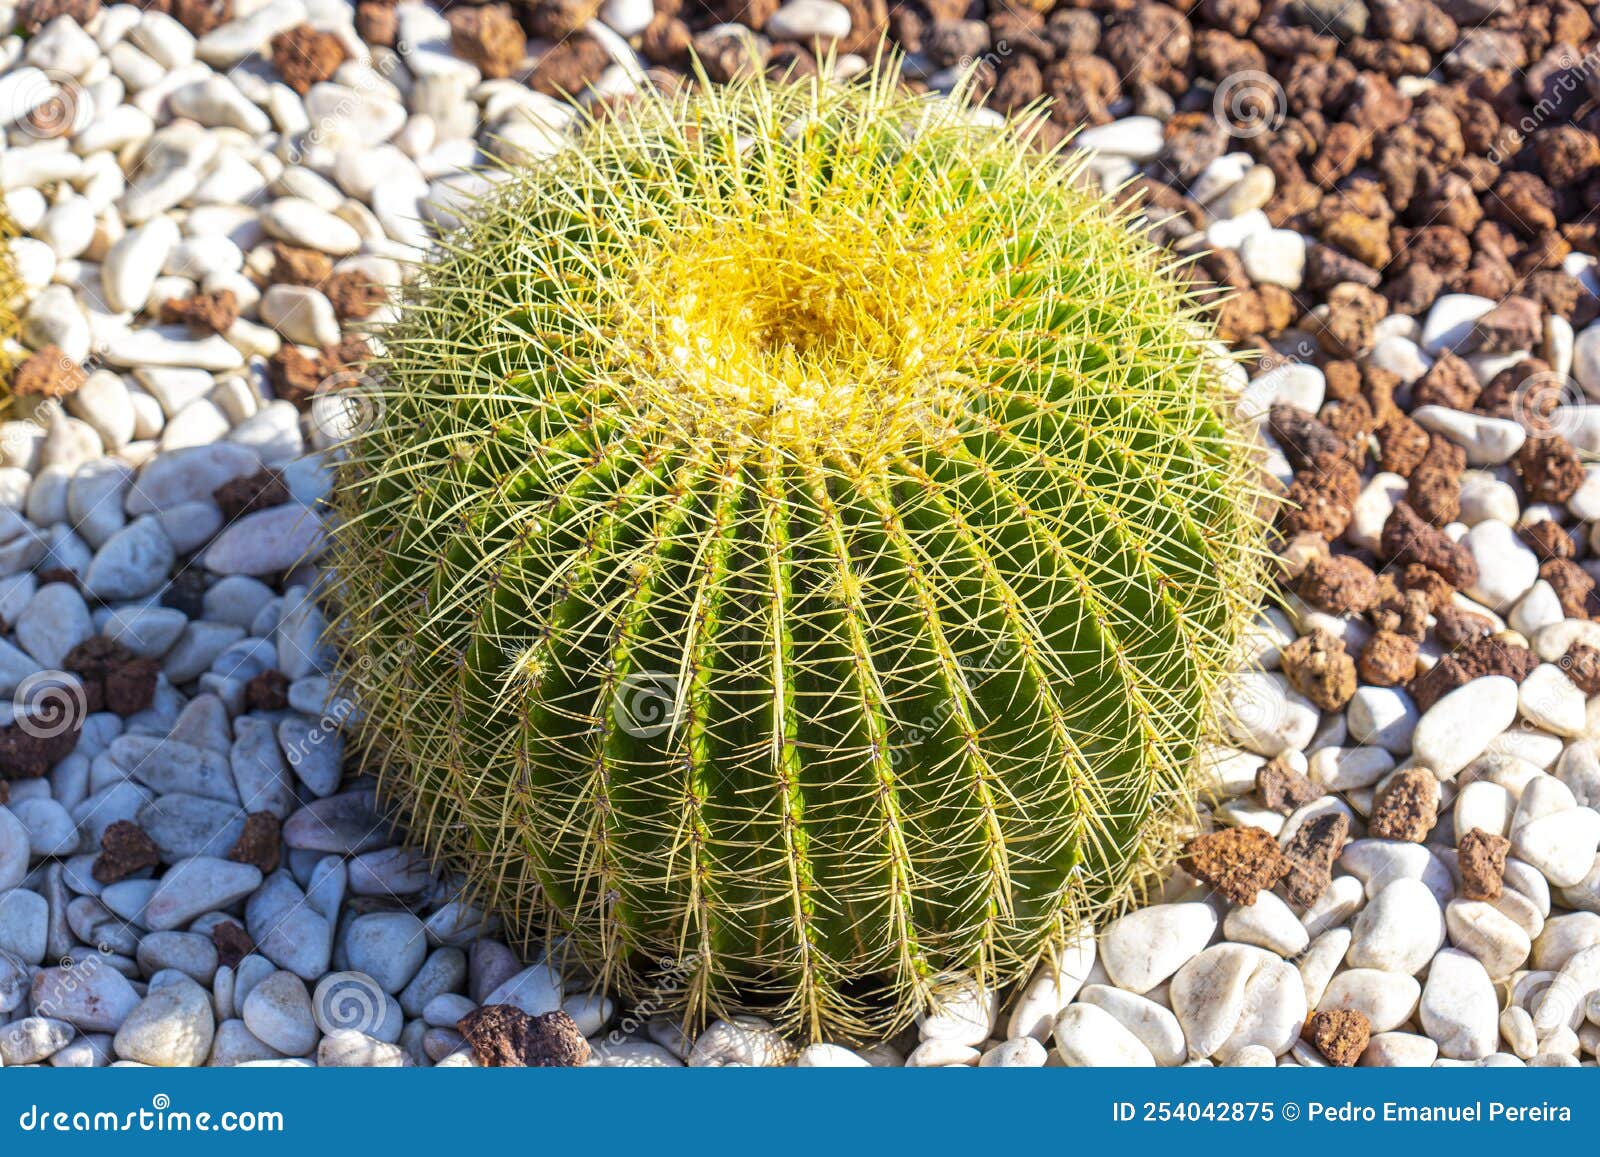 cato barrel cactus inserted in an urbanized area in a garden.